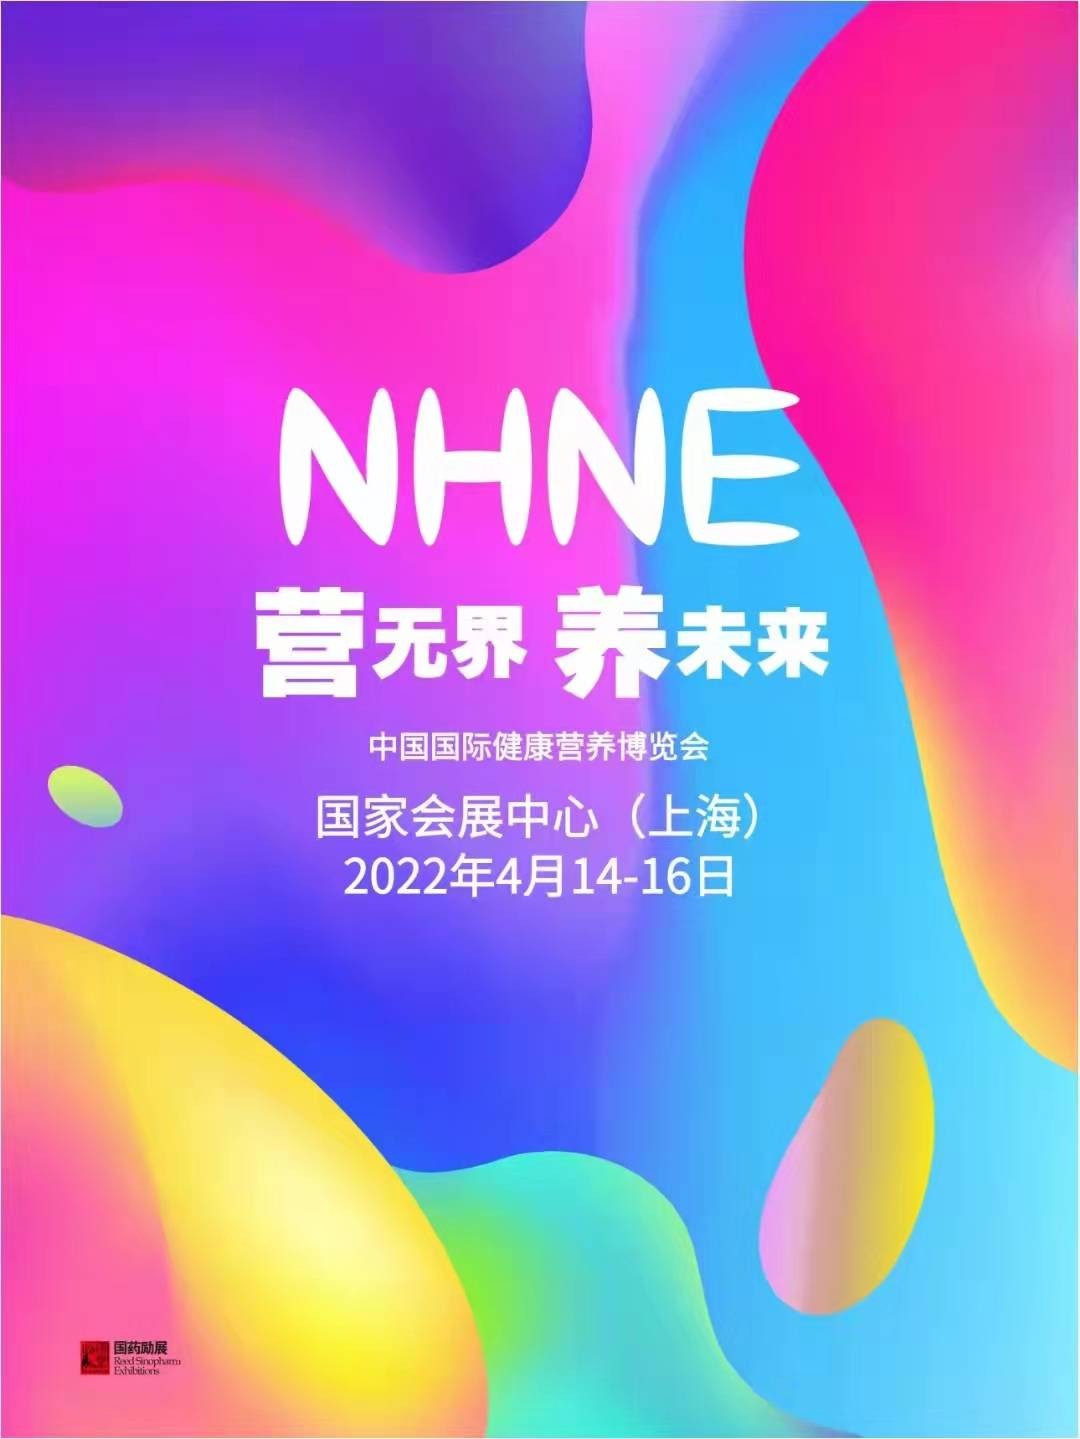 NHNE2022中国国际健康营养博览会上海站